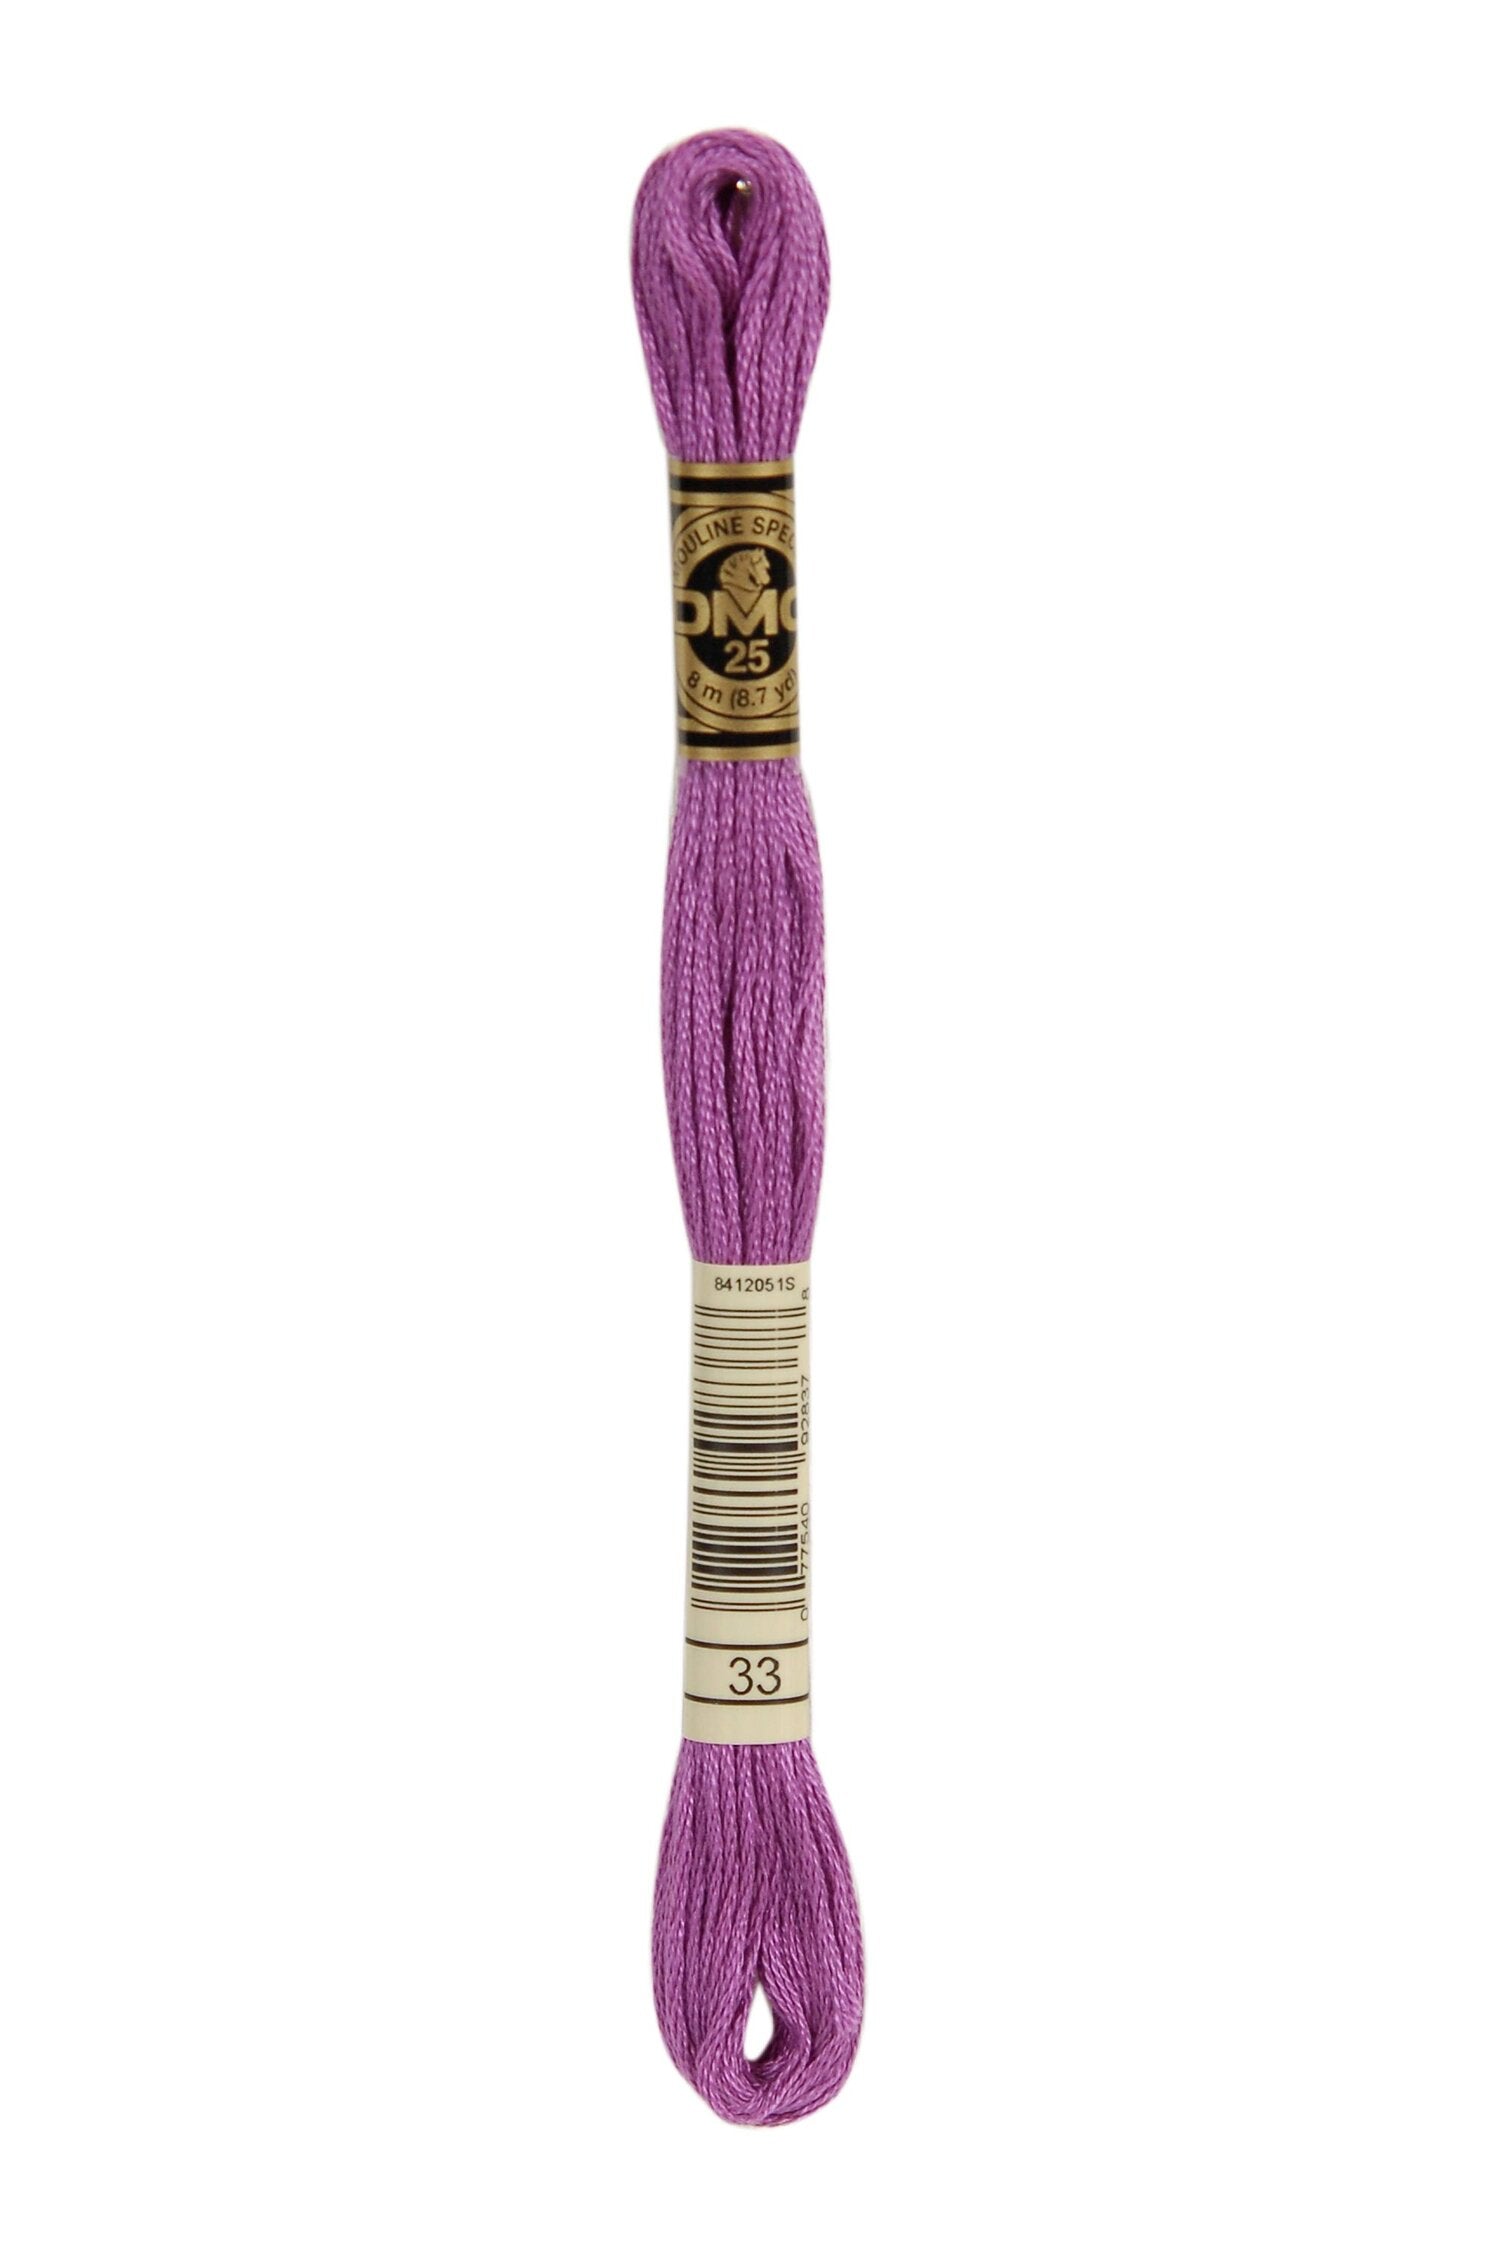 DMC 33 - Fuchsia - DMC 6 Strand Embroidery Thread, Thread & Floss, Thread & Floss, The Crafty Grimalkin - A Cross Stitch Store